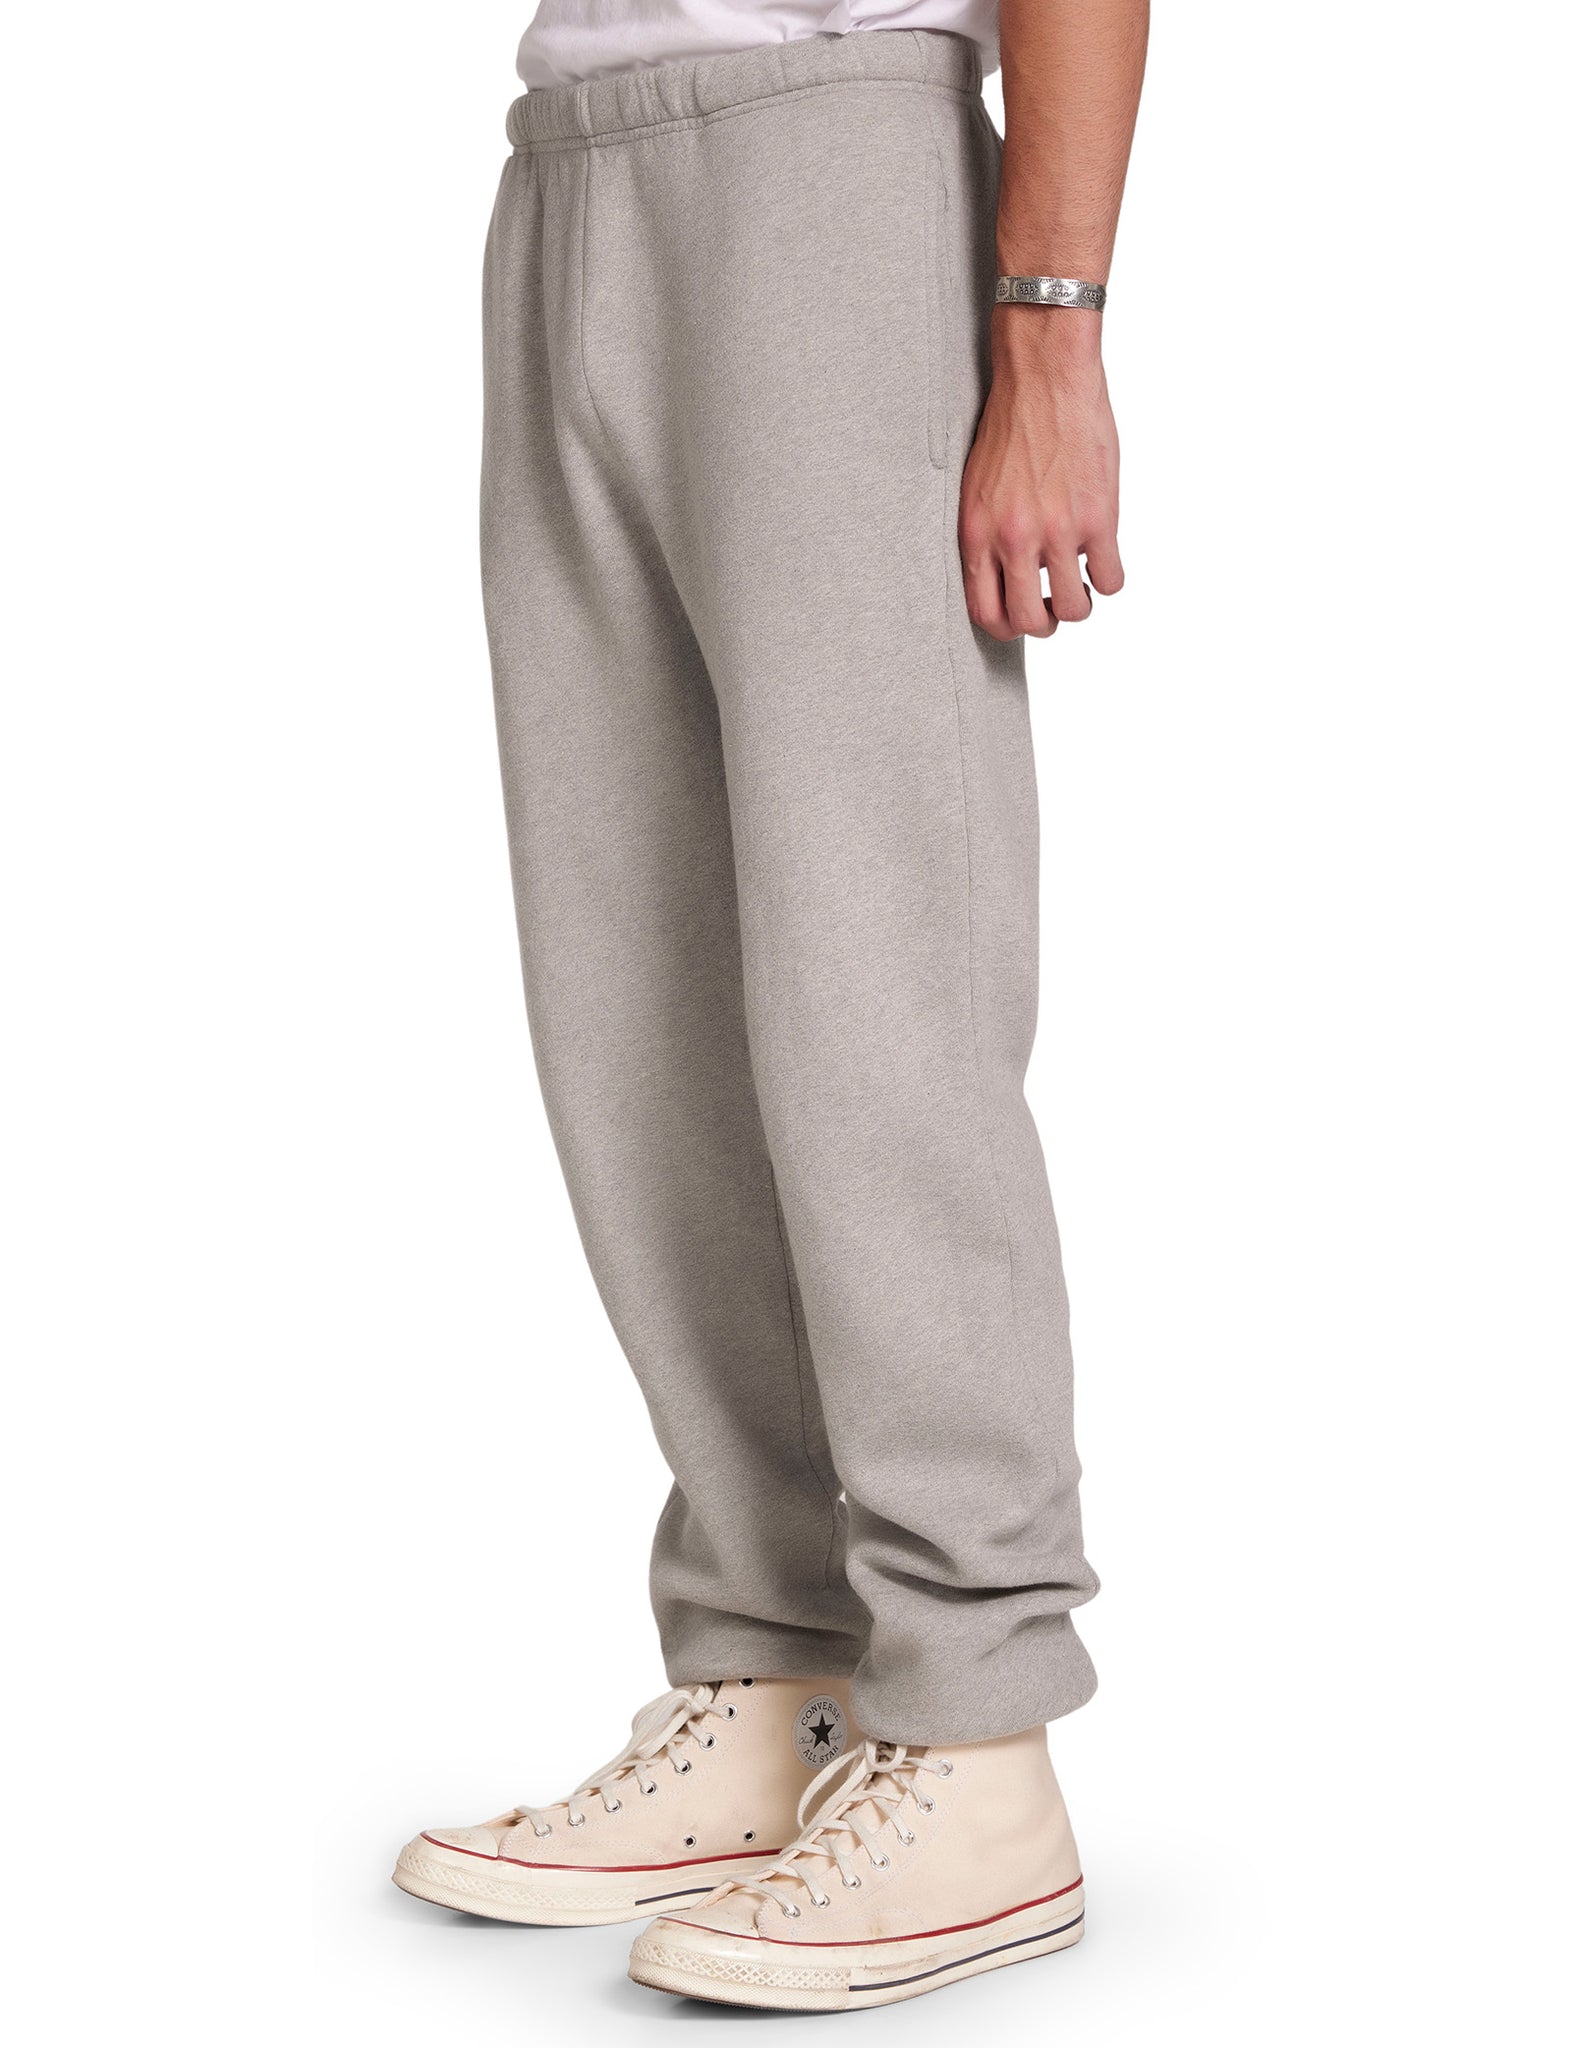 Kronk Gym Classic Grey Sweatpants